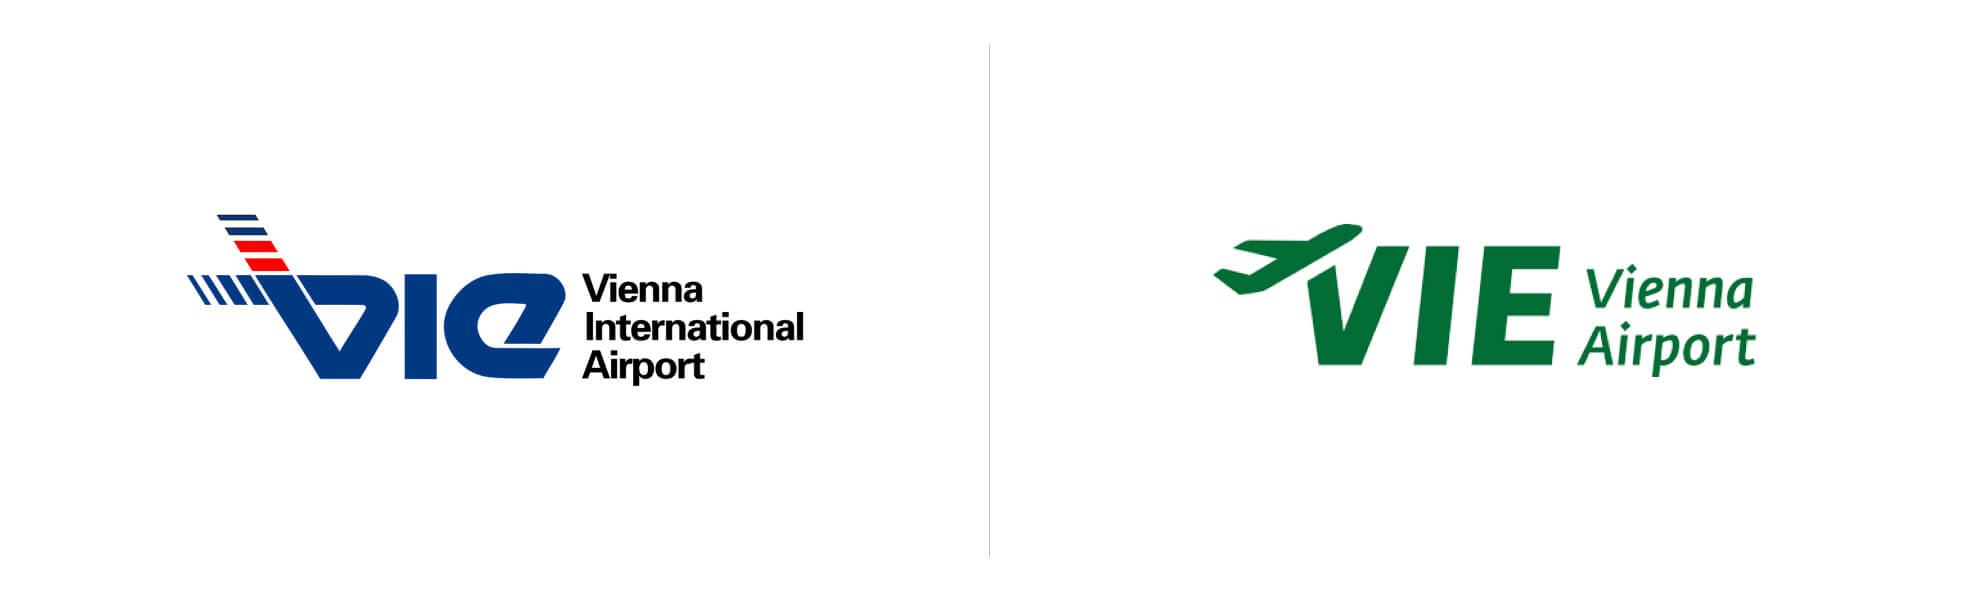 stare i nowe logo lotniska we wiedniu